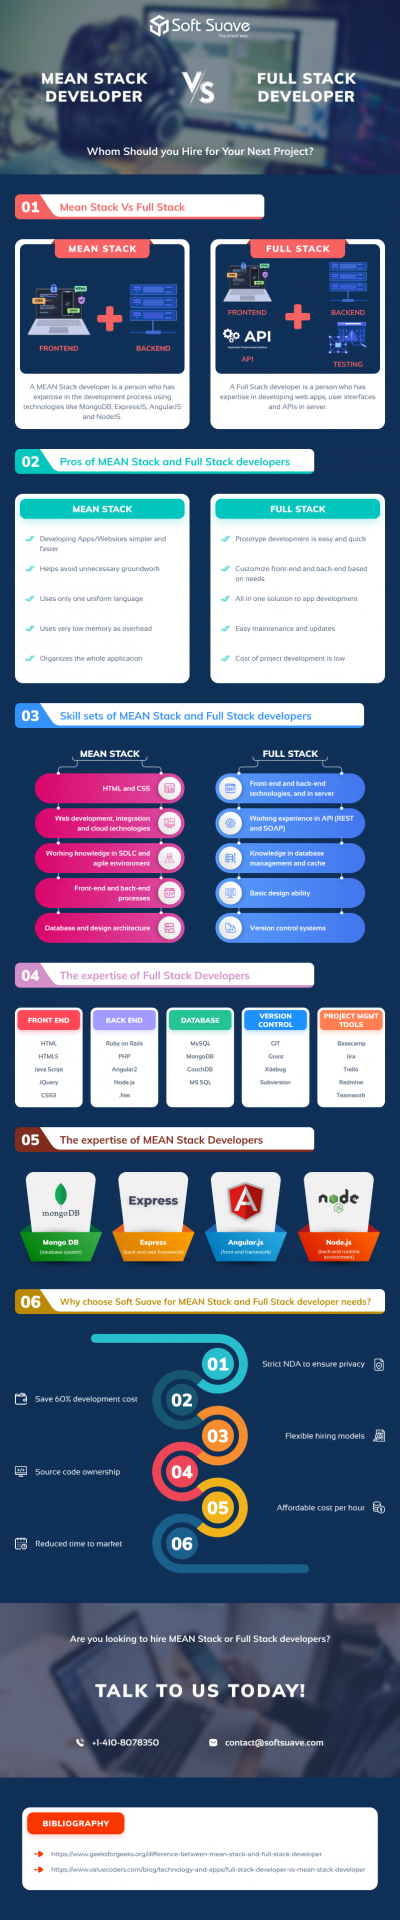 MEAN Stack Vs Full Stack Developer [Infographic]